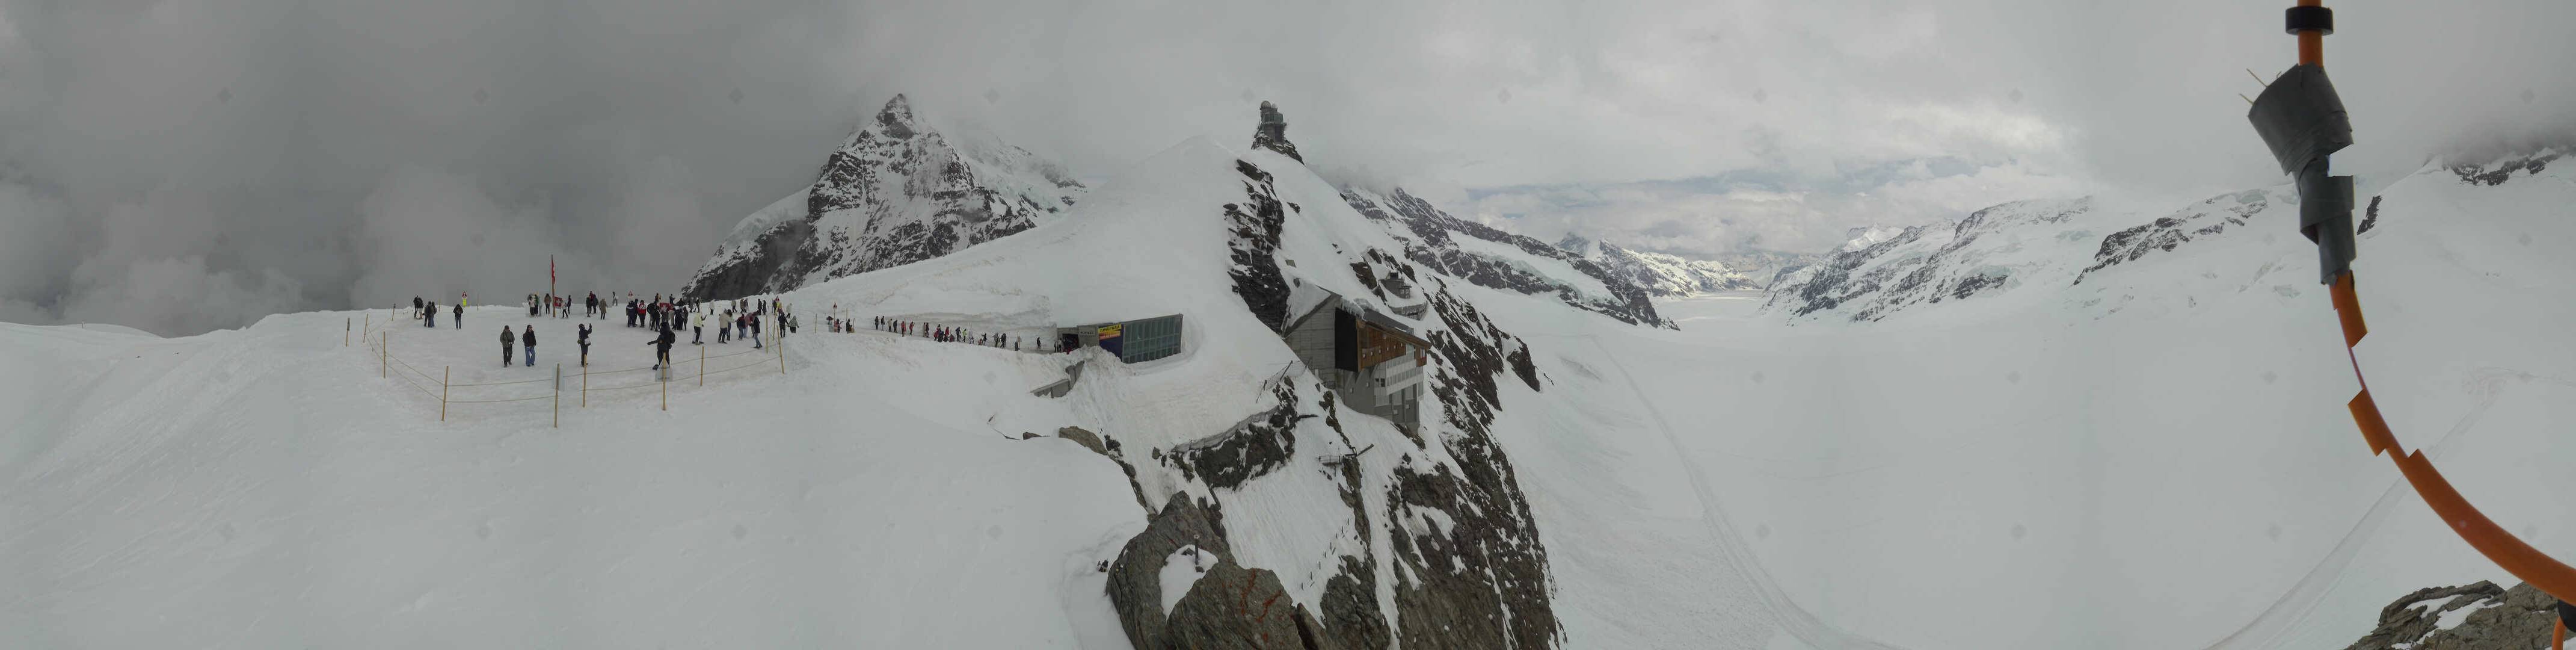 bergfex - Webcam Jungfraujoch - Jungfrau Ski Region Grindelwald - Wengen - Cam Panorama - Livecam